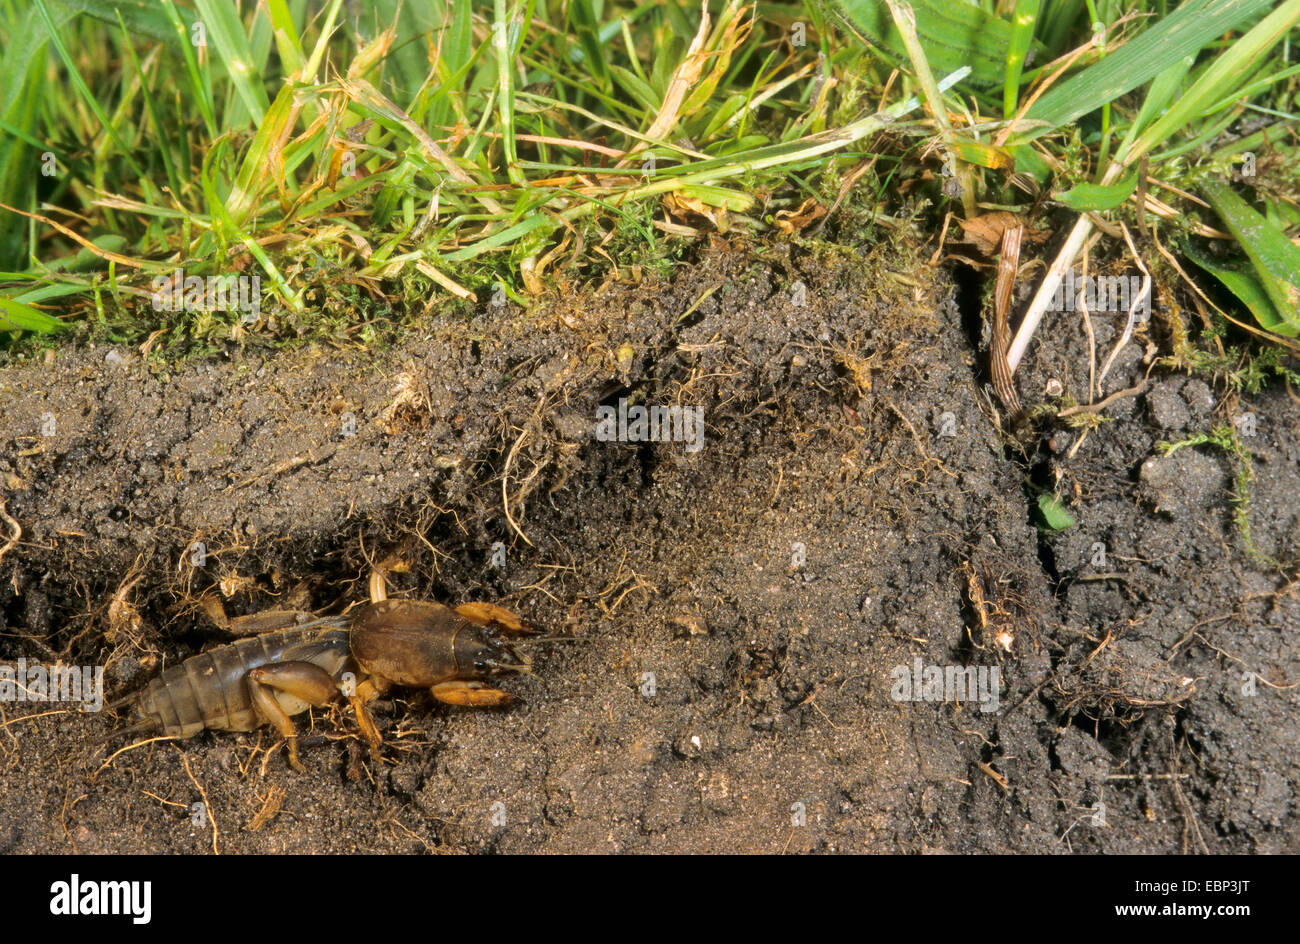 European mole cricket, Mole cricket (Gryllotalpa gryllotalpa), subsurface, Germany Stock Photo